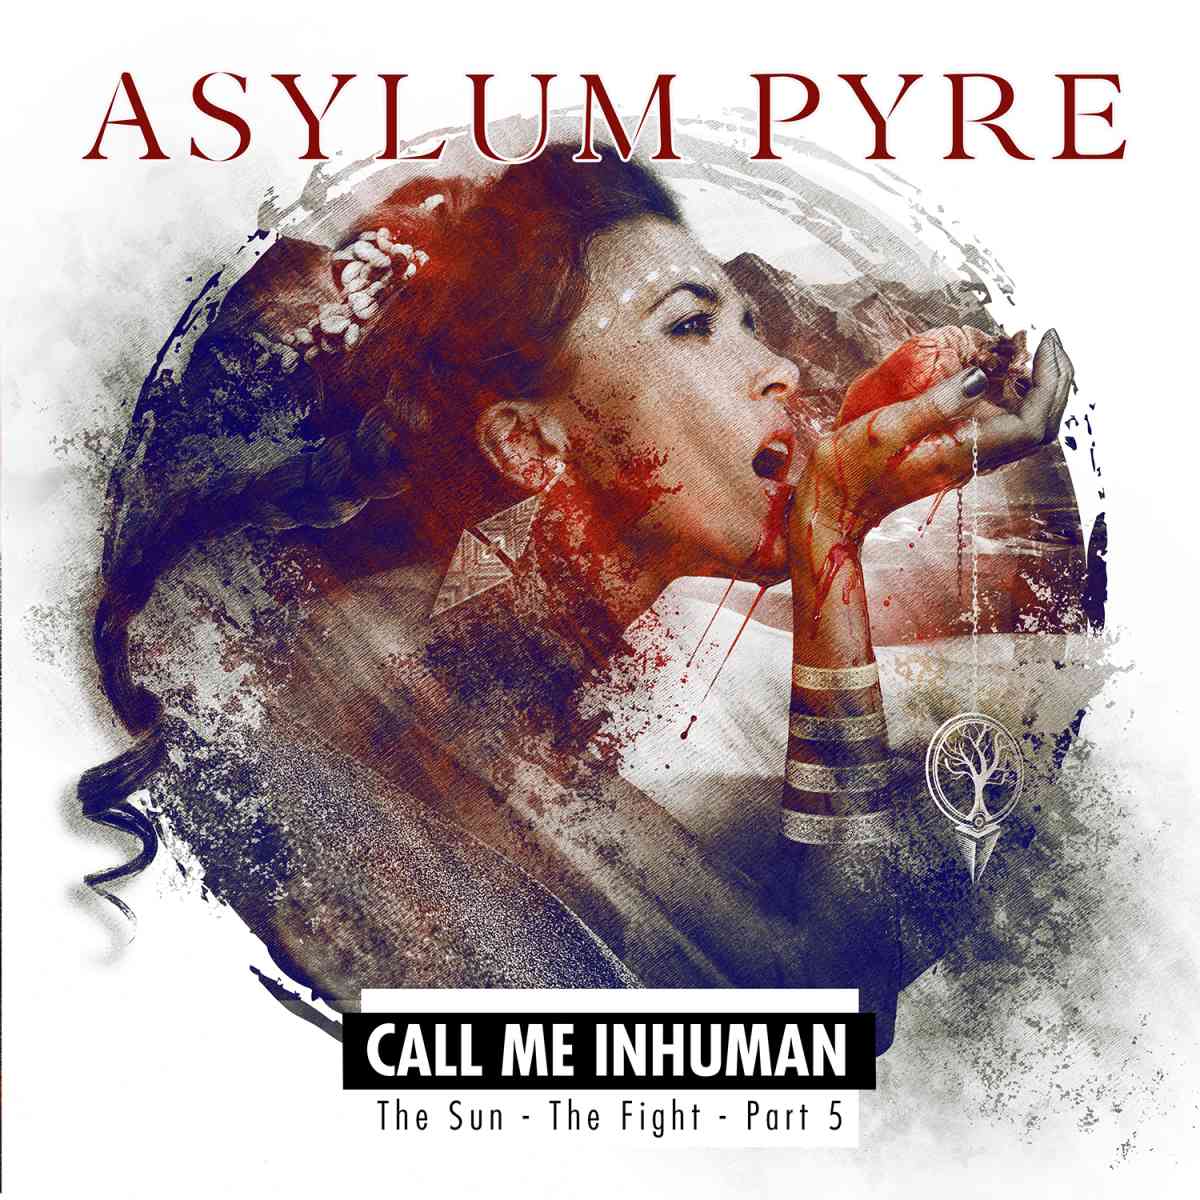 ASYLUM PYRE - Call Me Inhuman - The Sun - The Fight Part 5 - album cover